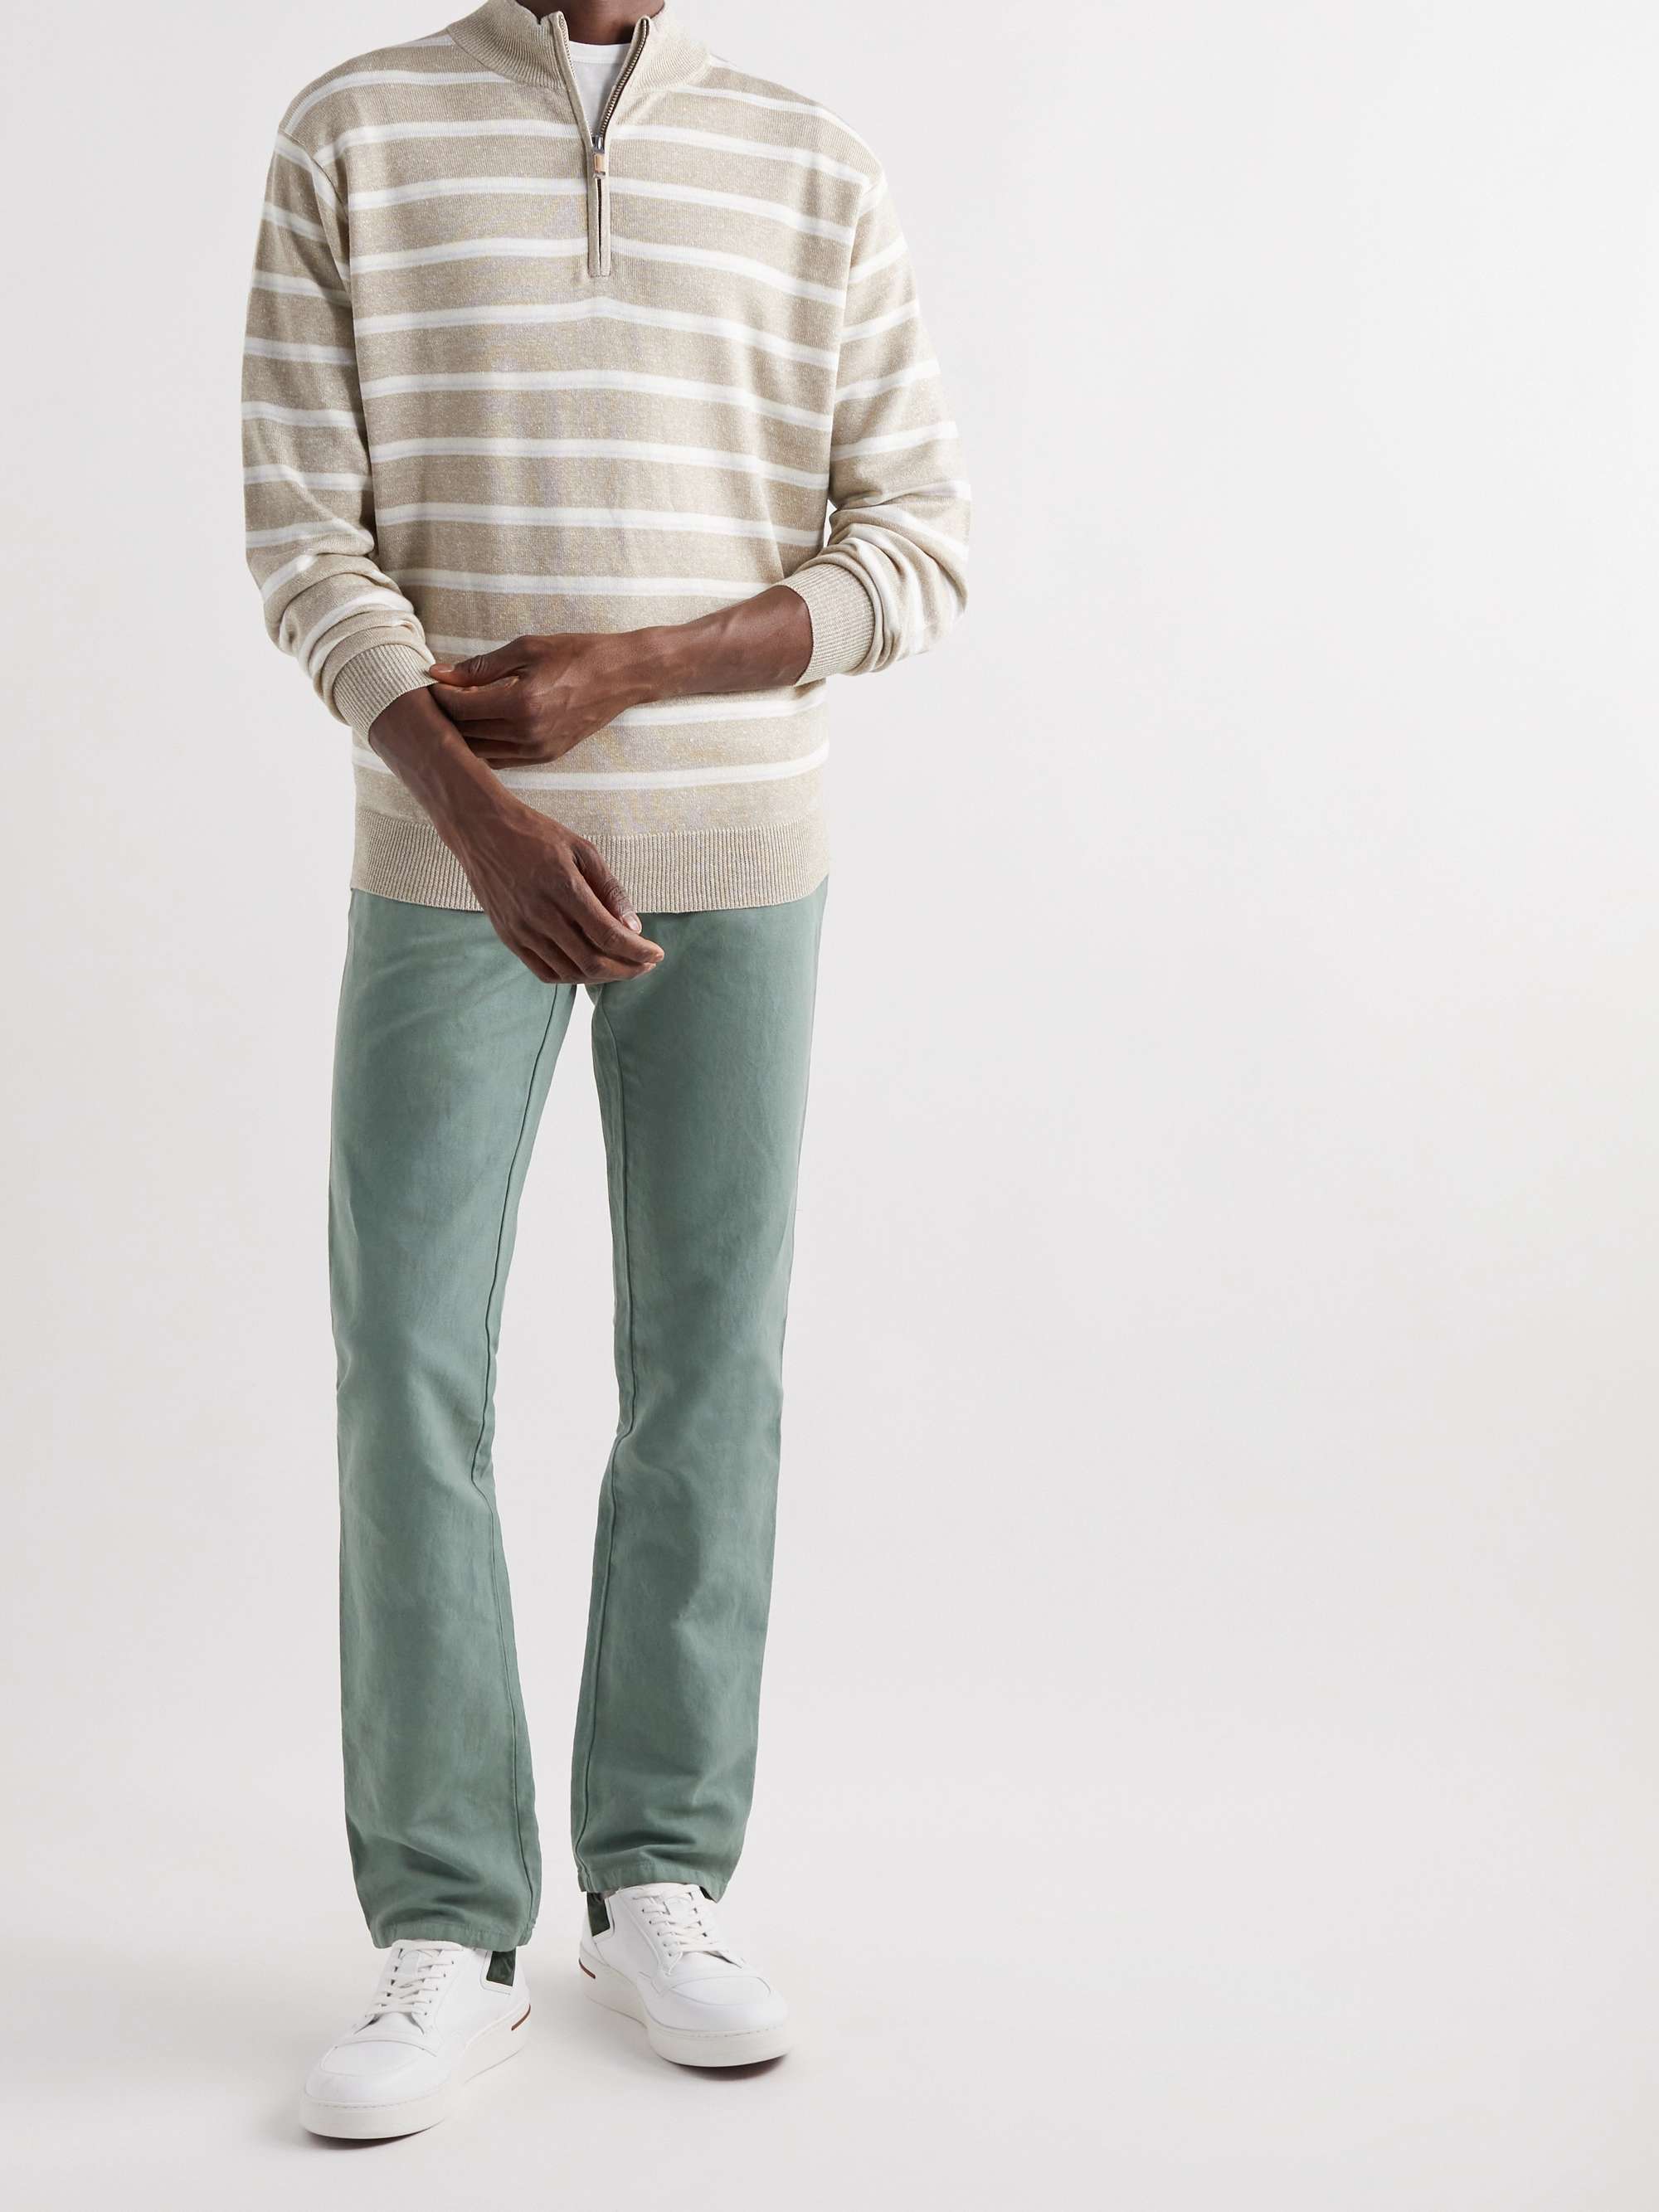 ZEGNA Slim-Fit Straight-Leg Cotton and Linen-Blend Jeans